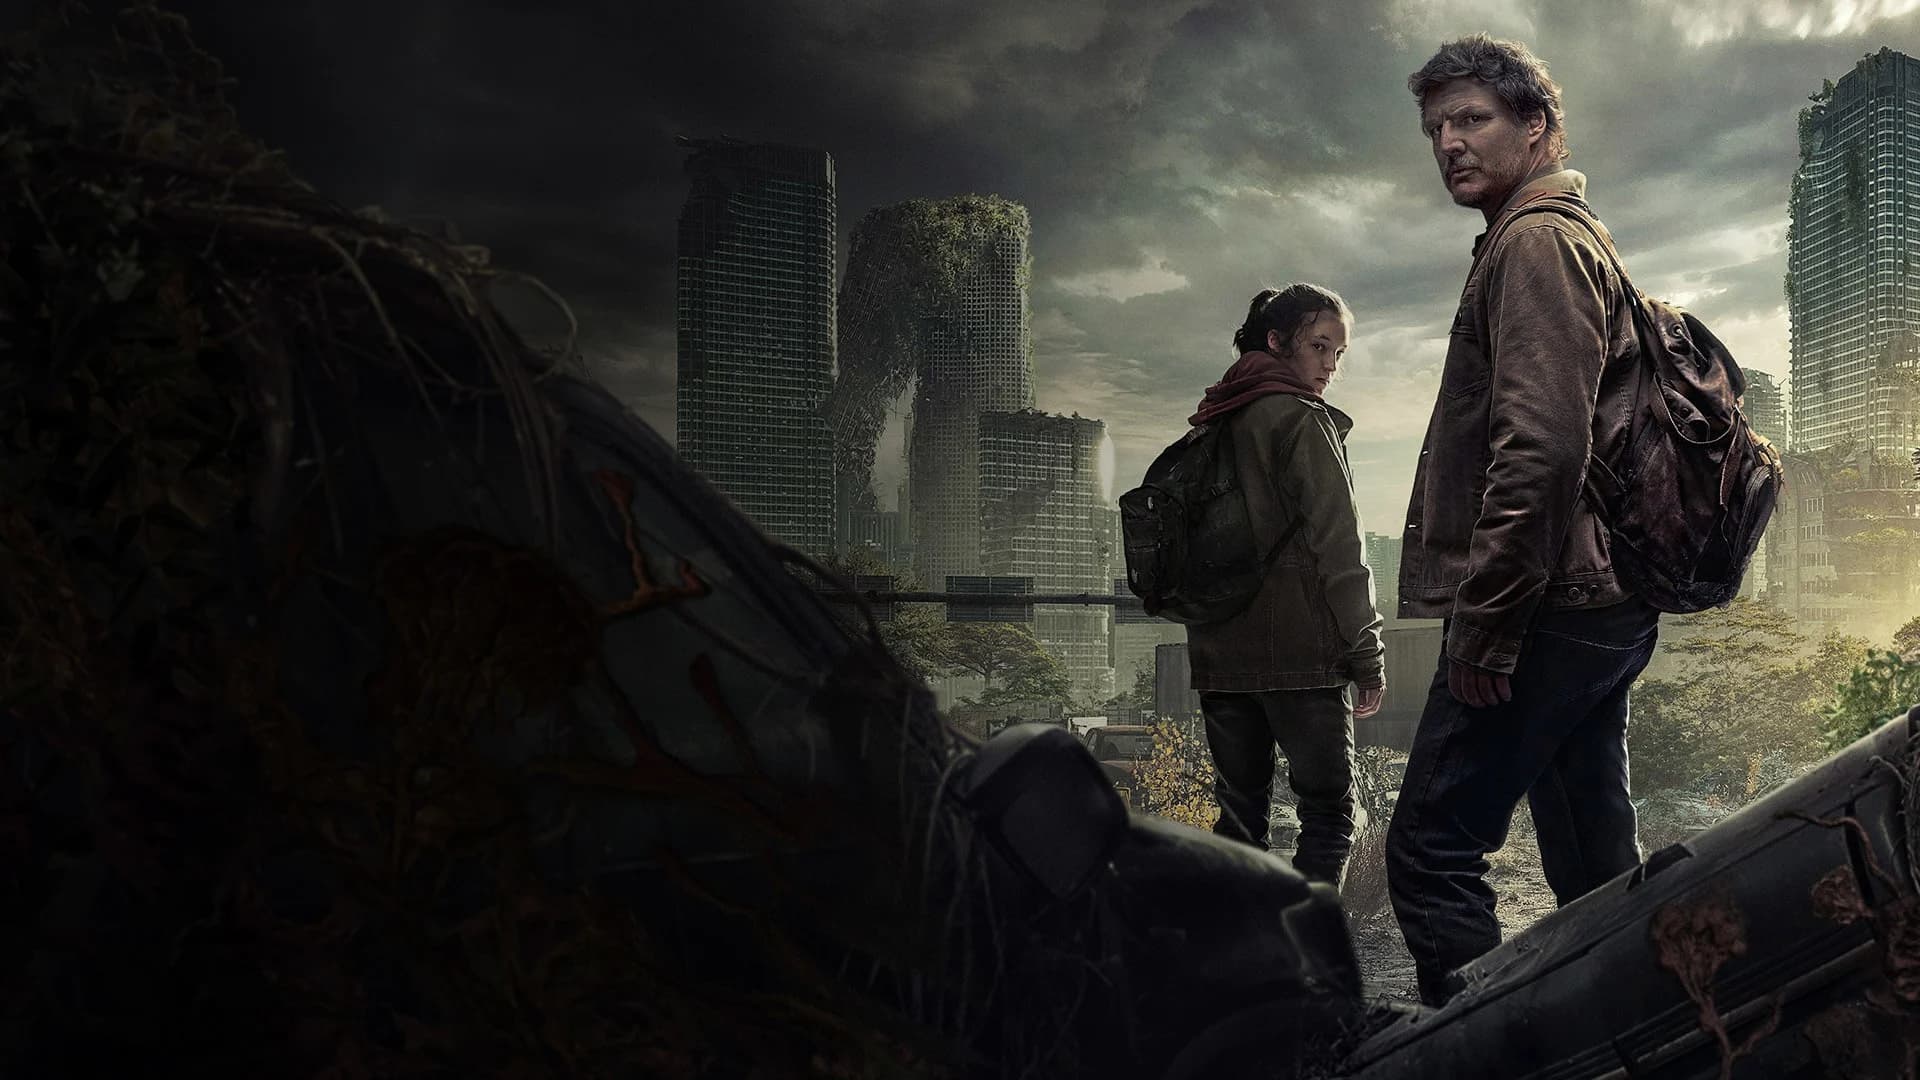 Serie Tv The Last Of Us, seconda stagione